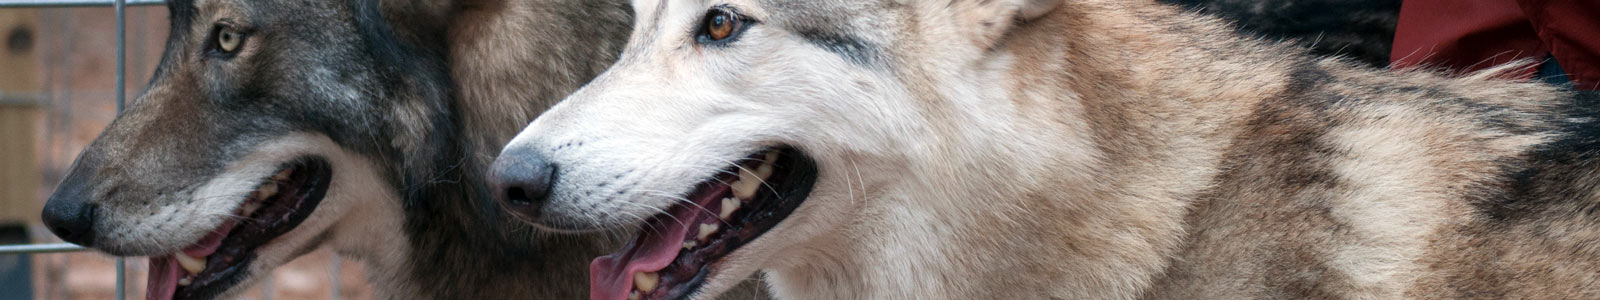 Texas Wolfdog Project Ambassadors + Long-Term Residents Header Image